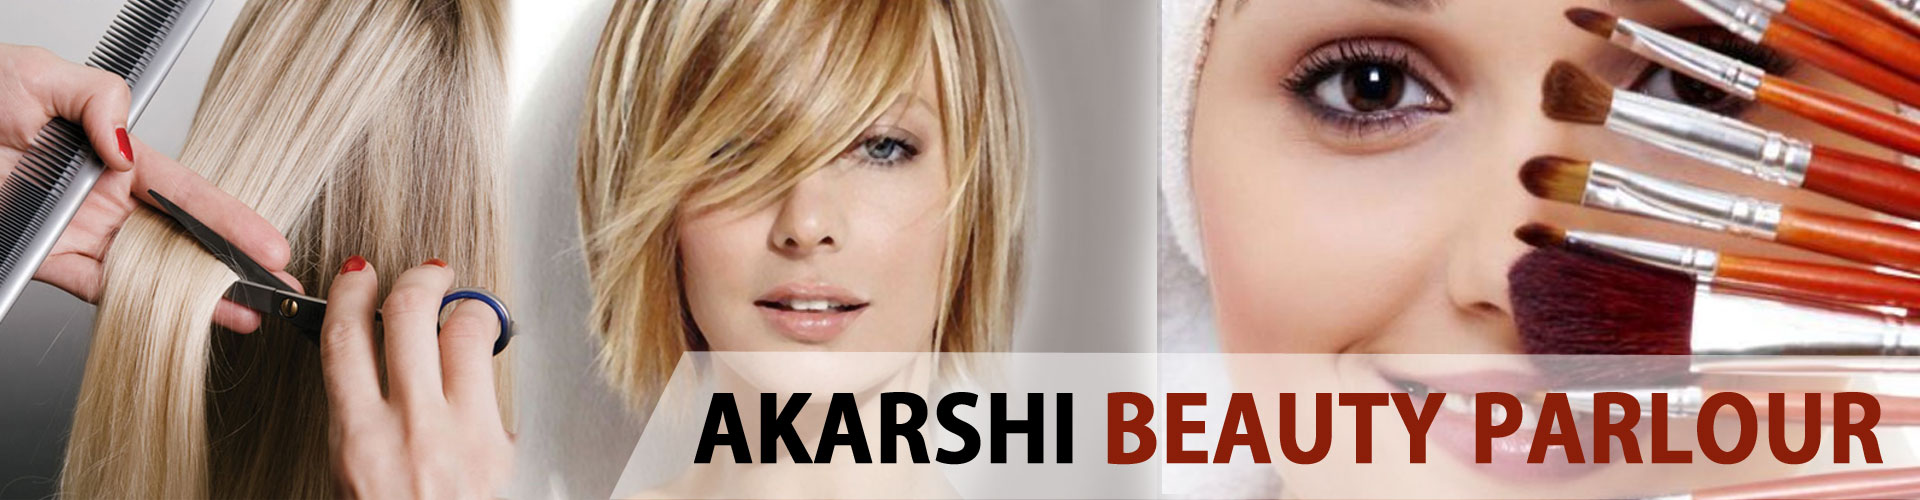 aakarshi-beauty-palour-banner